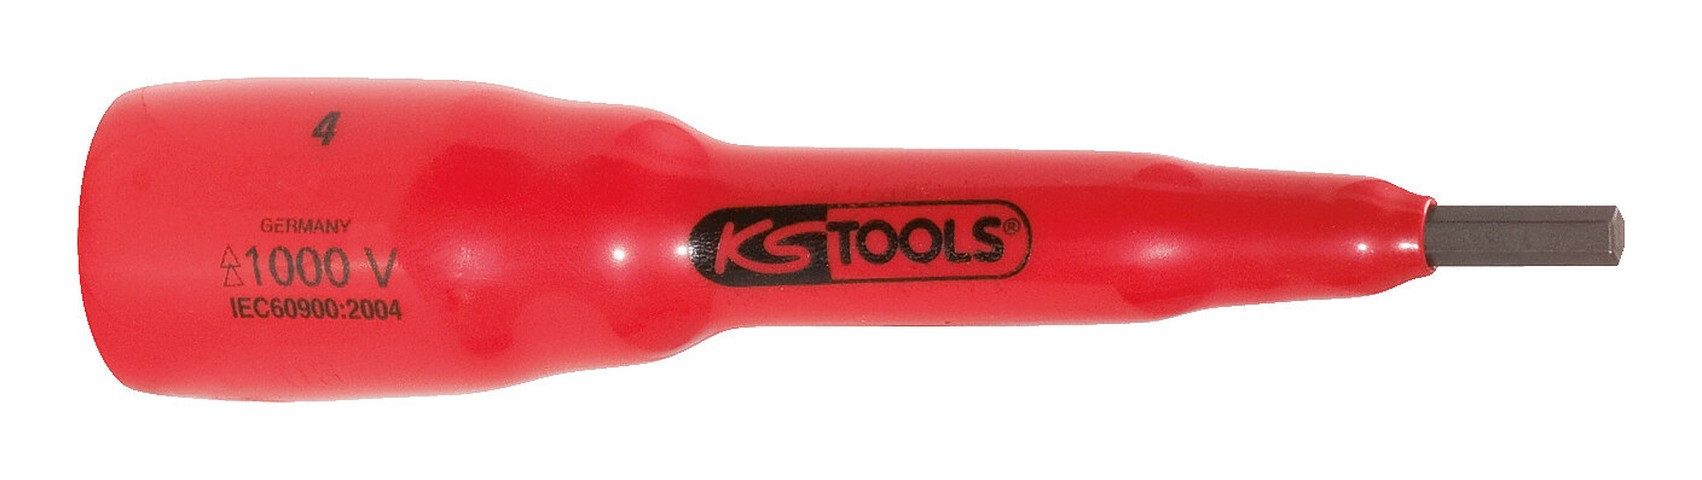 KS Tools Sechskant-Bit, 3/8" Stecknuss m. Schutzisolierung f. Innensechskant-Schrauben, 12